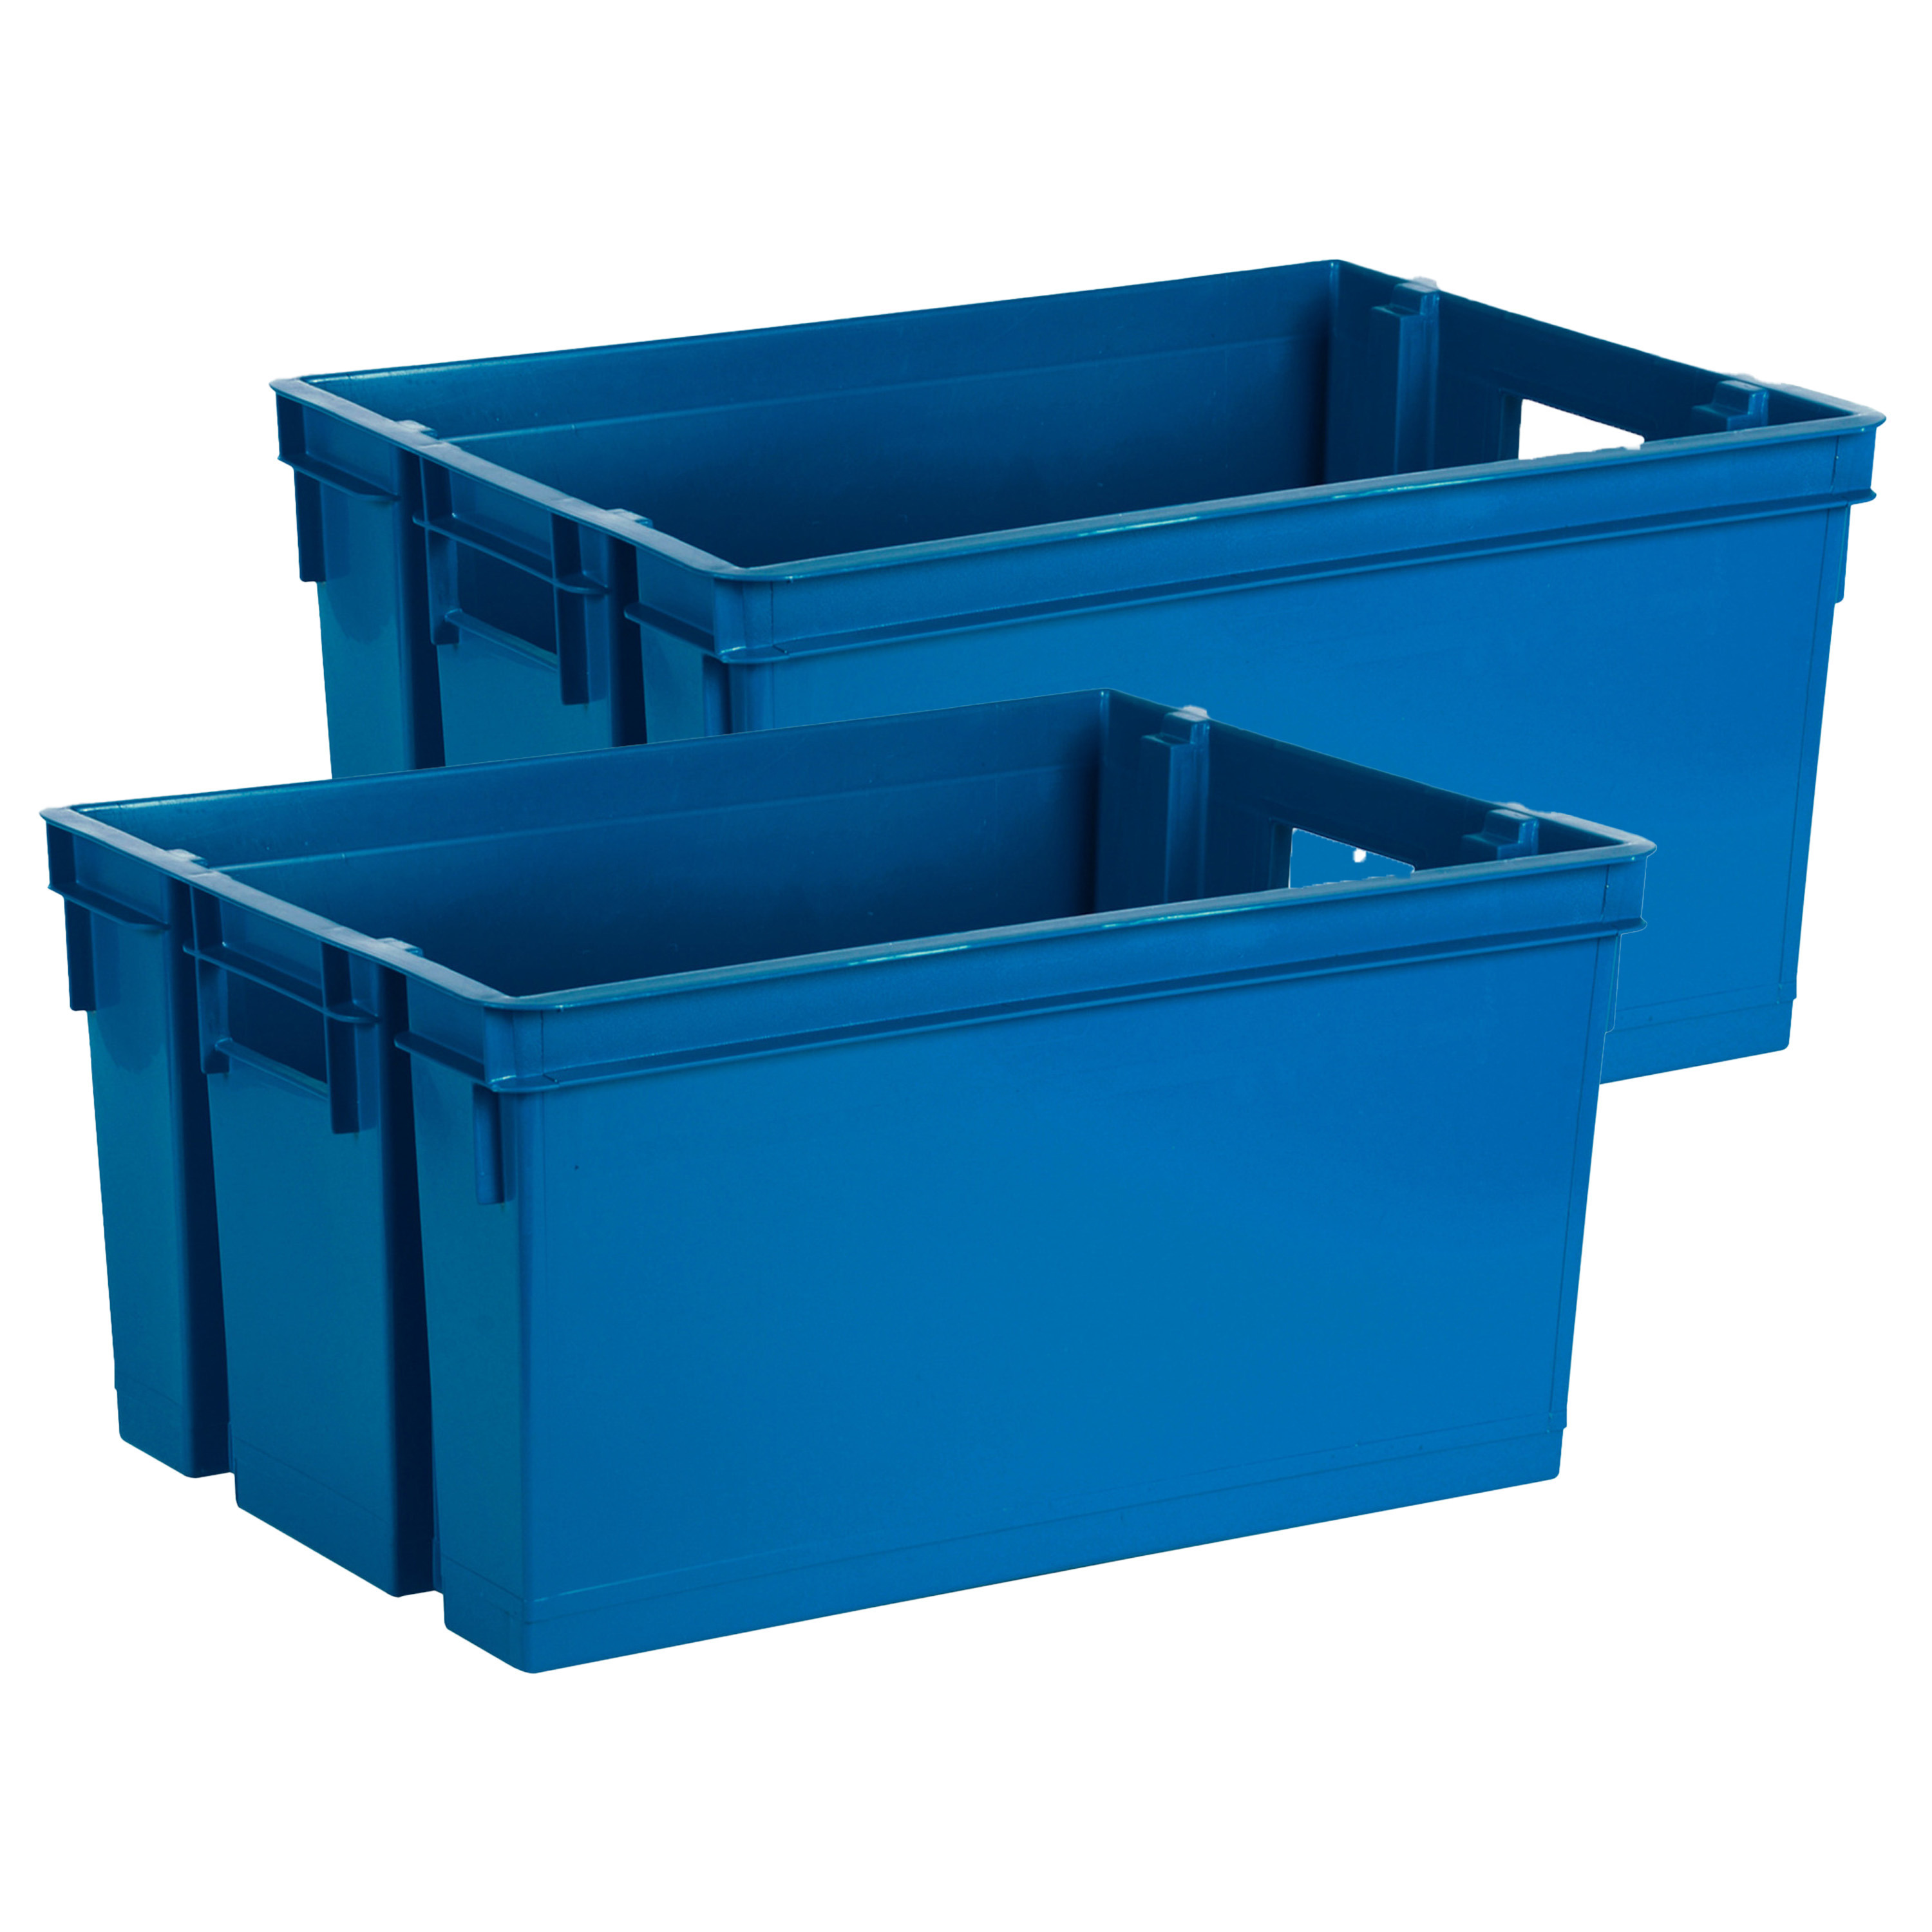 Opbergbox-opbergkrat 50 L 2x blauw kunststof 56 x 41 x 29 cm stapelbaar-nestbaar